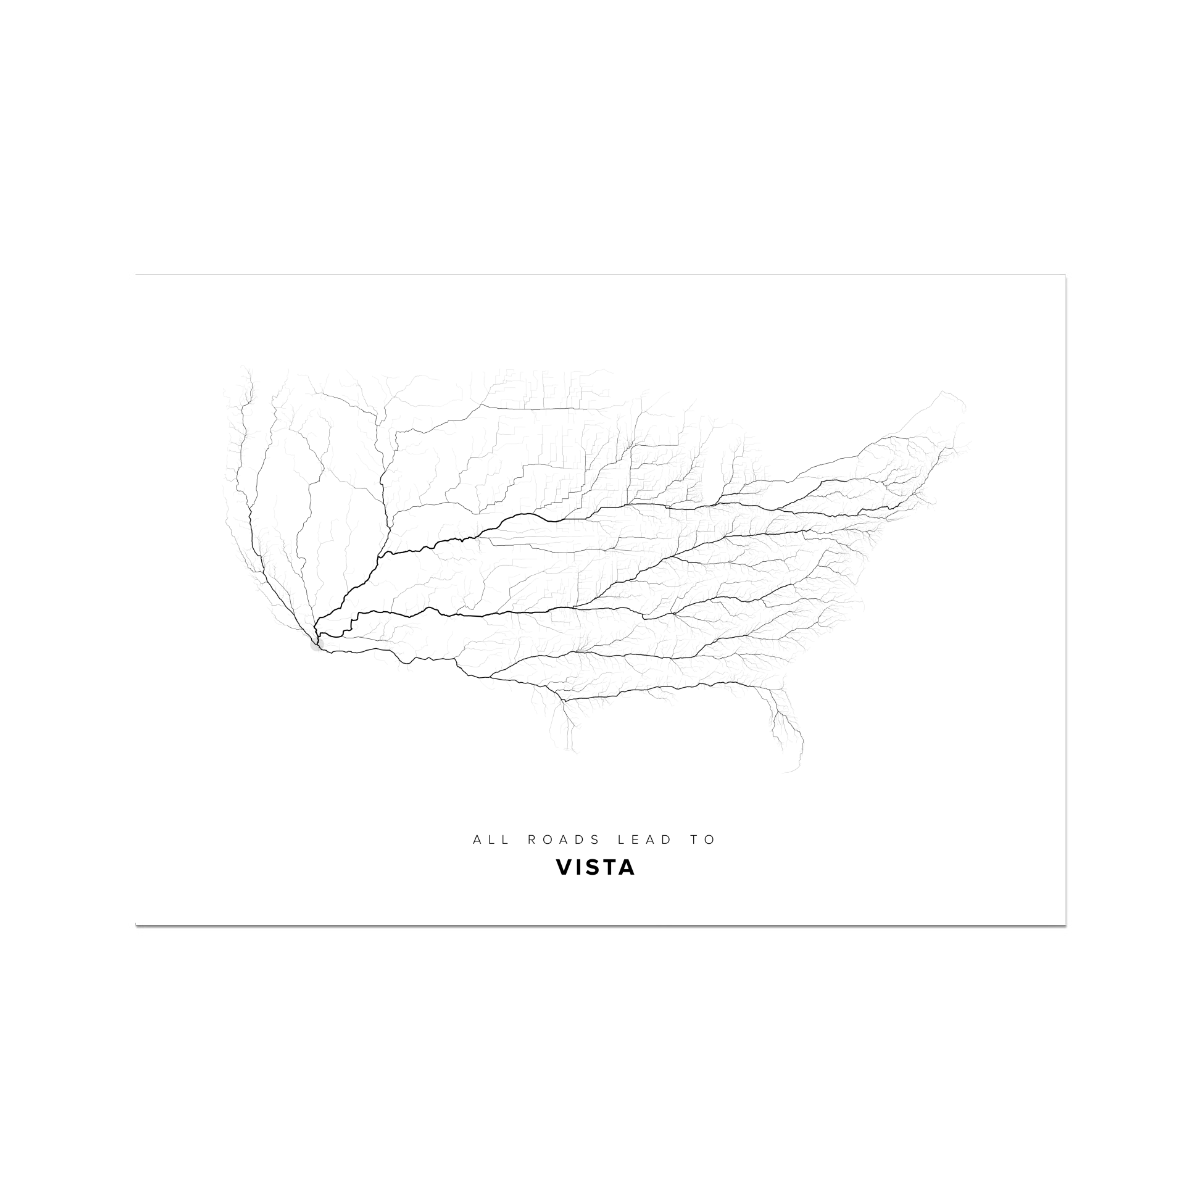 All roads lead to Vista (United States of America) Fine Art Map Print